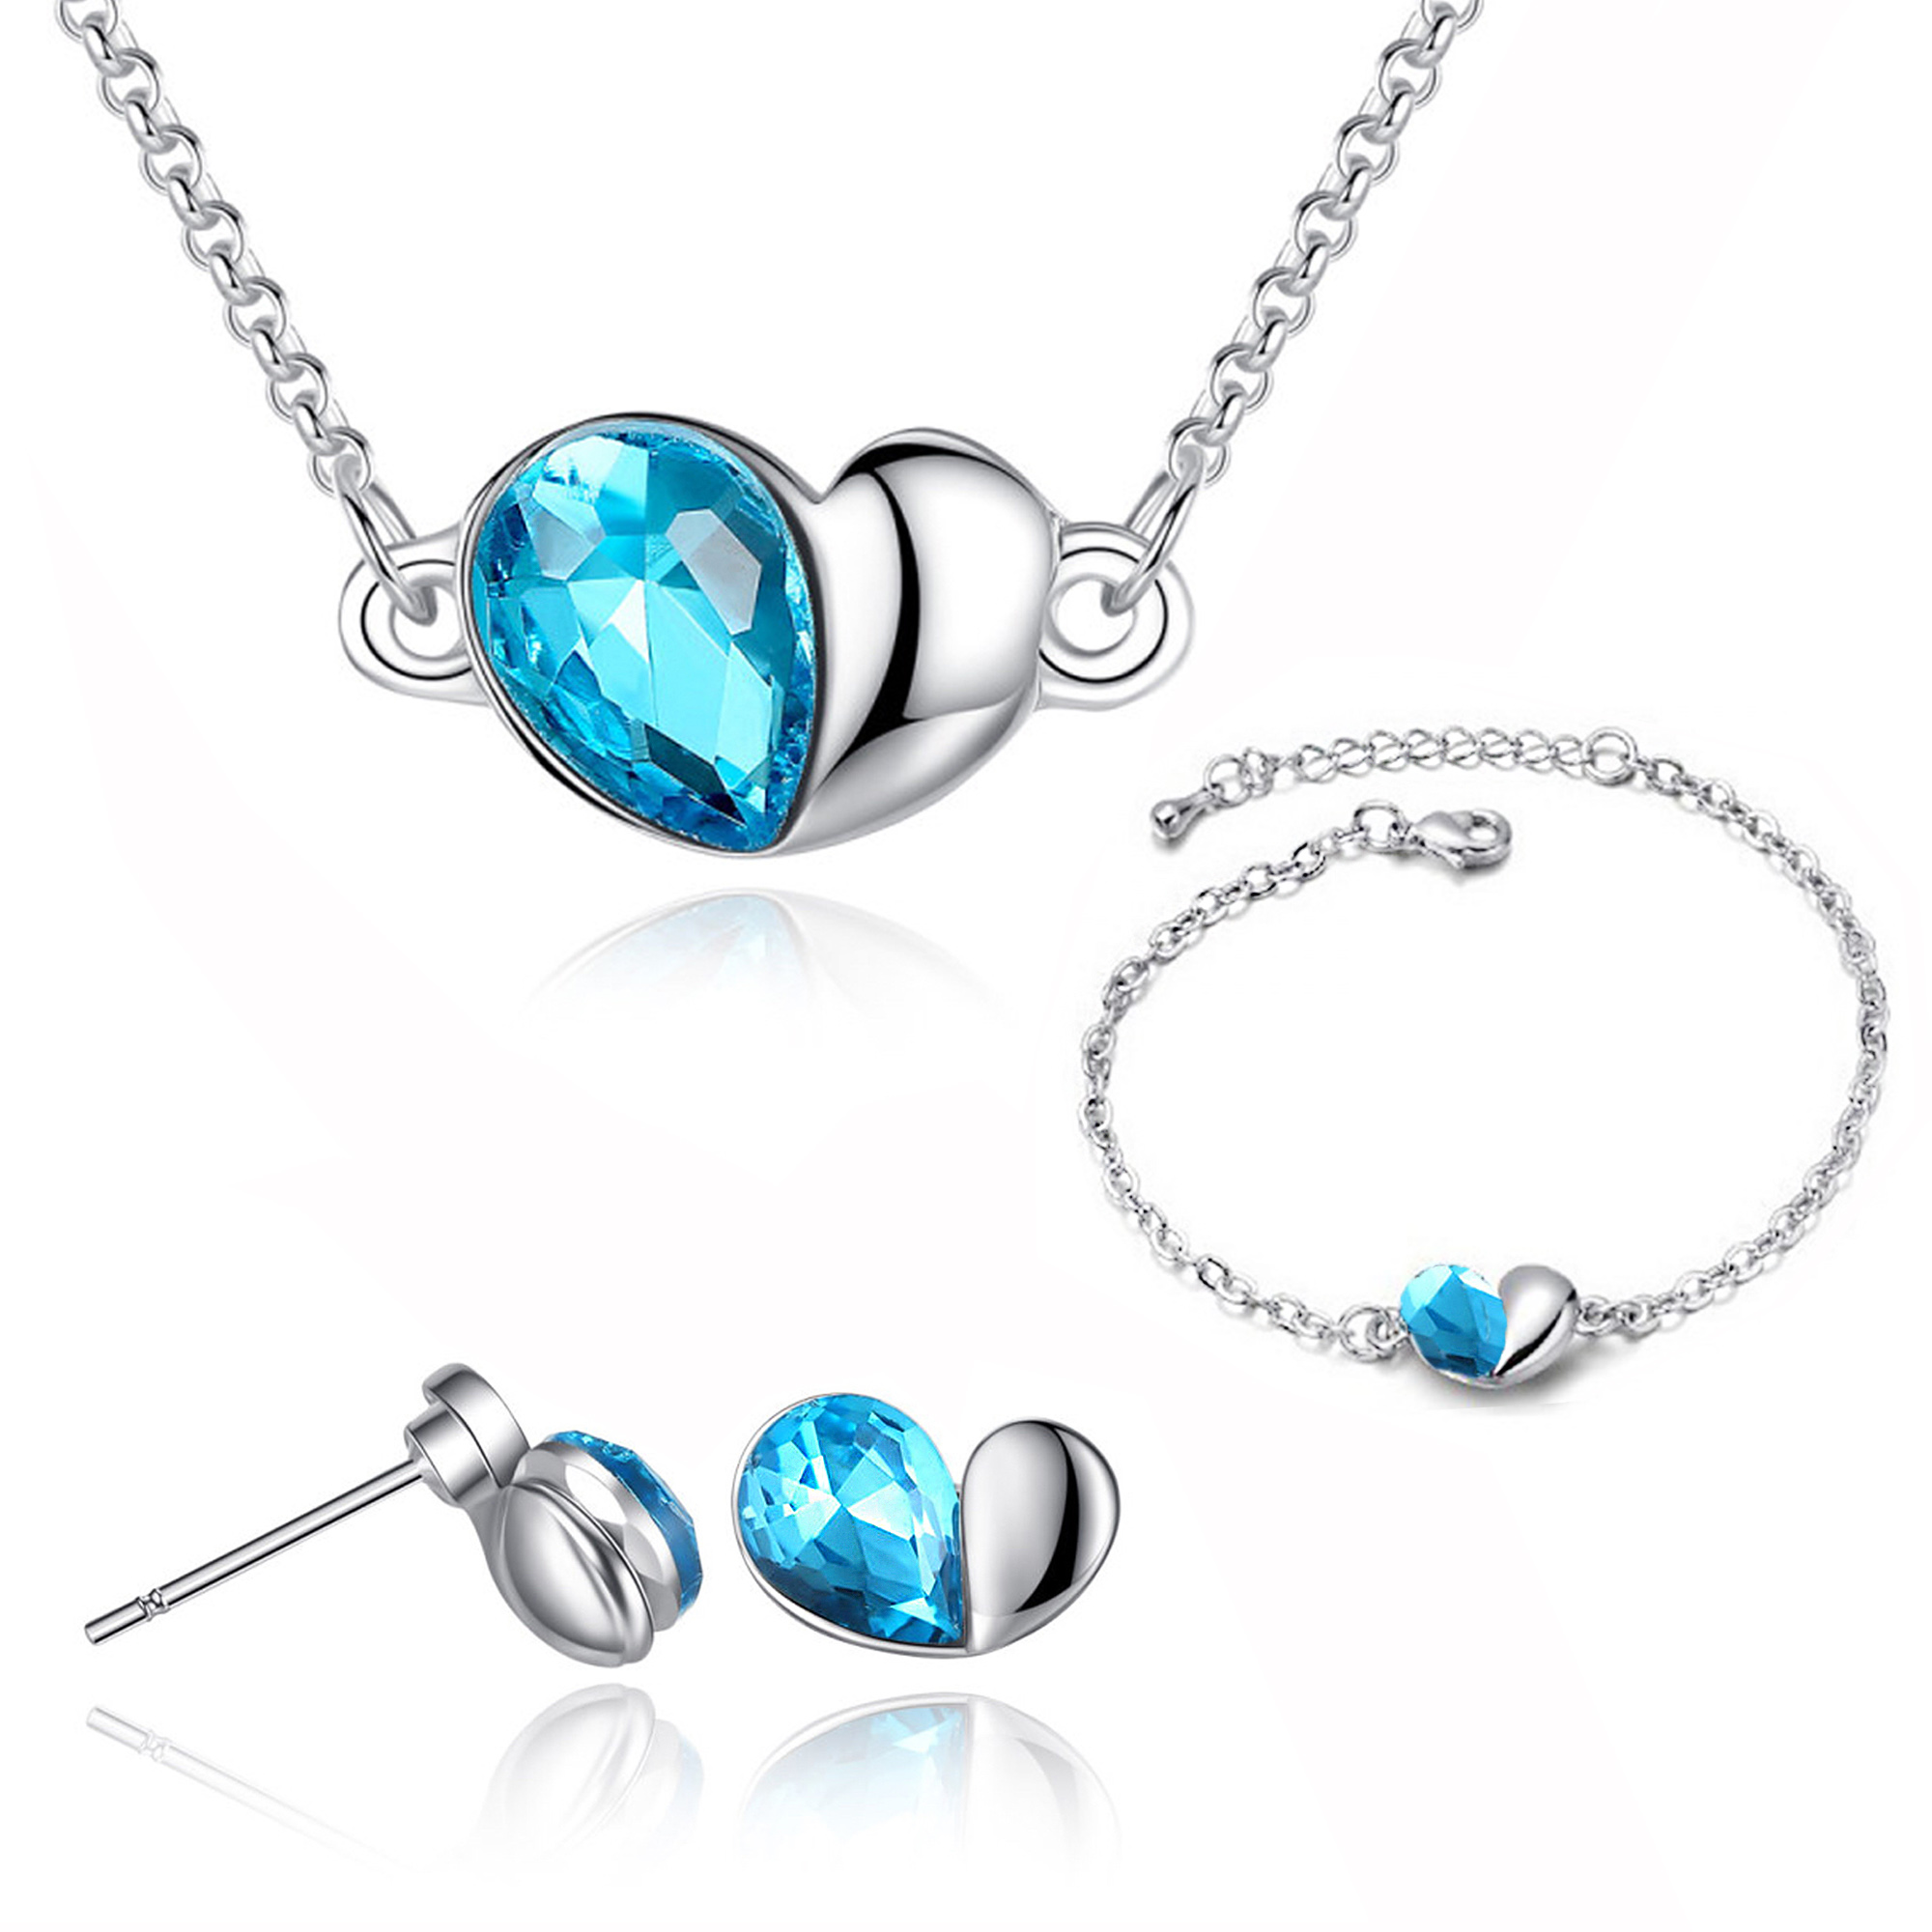 30pc_Heart Inspired Necklace Earrings and Bracelet Set with Swarovski Elements Crystal_UK Seller_GSVSET059